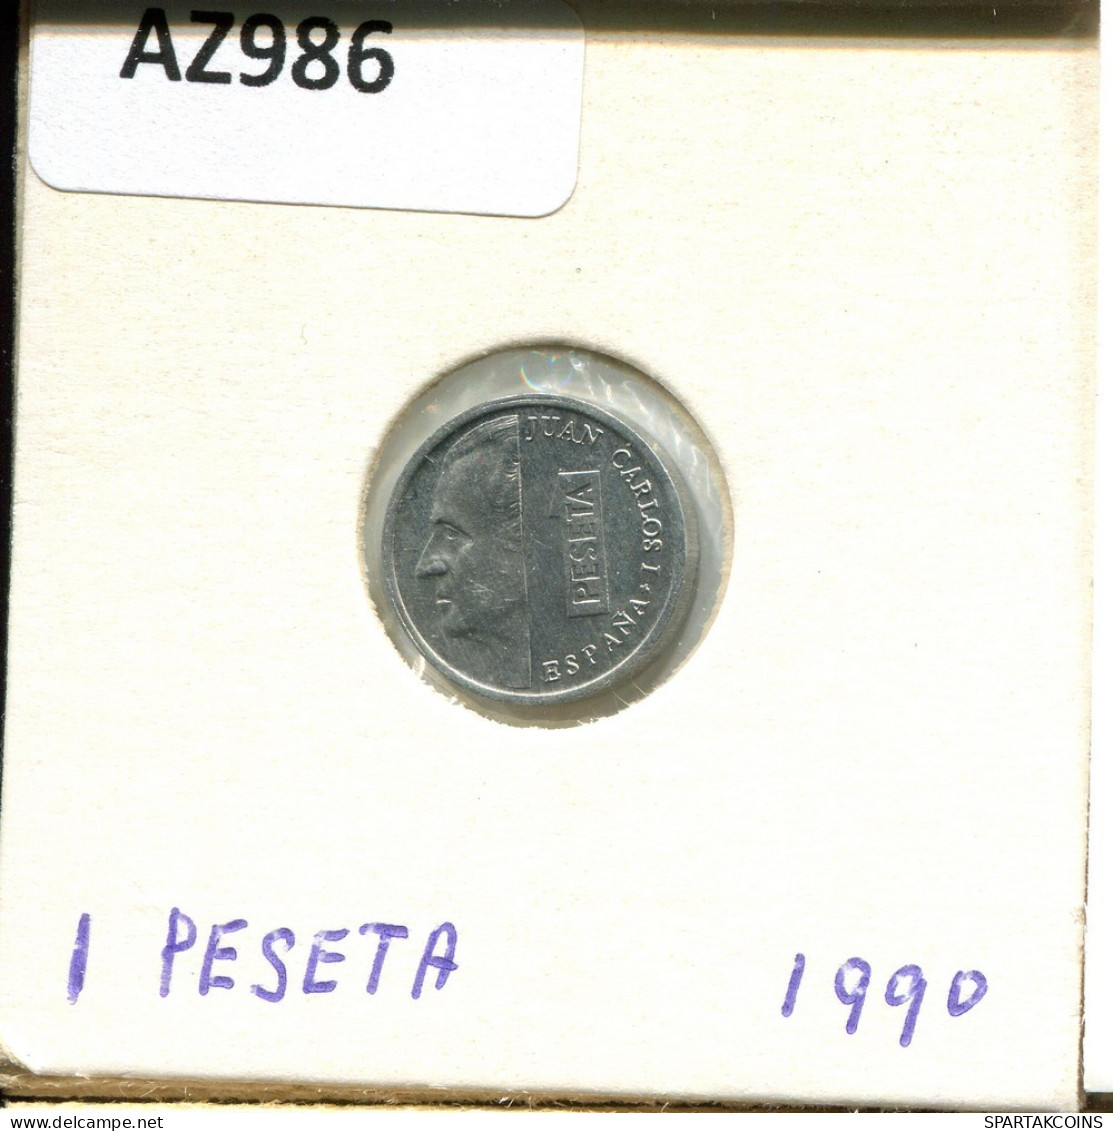 1 PESETA 1990 SPANIEN SPAIN Münze #AZ986.D.A - 1 Peseta